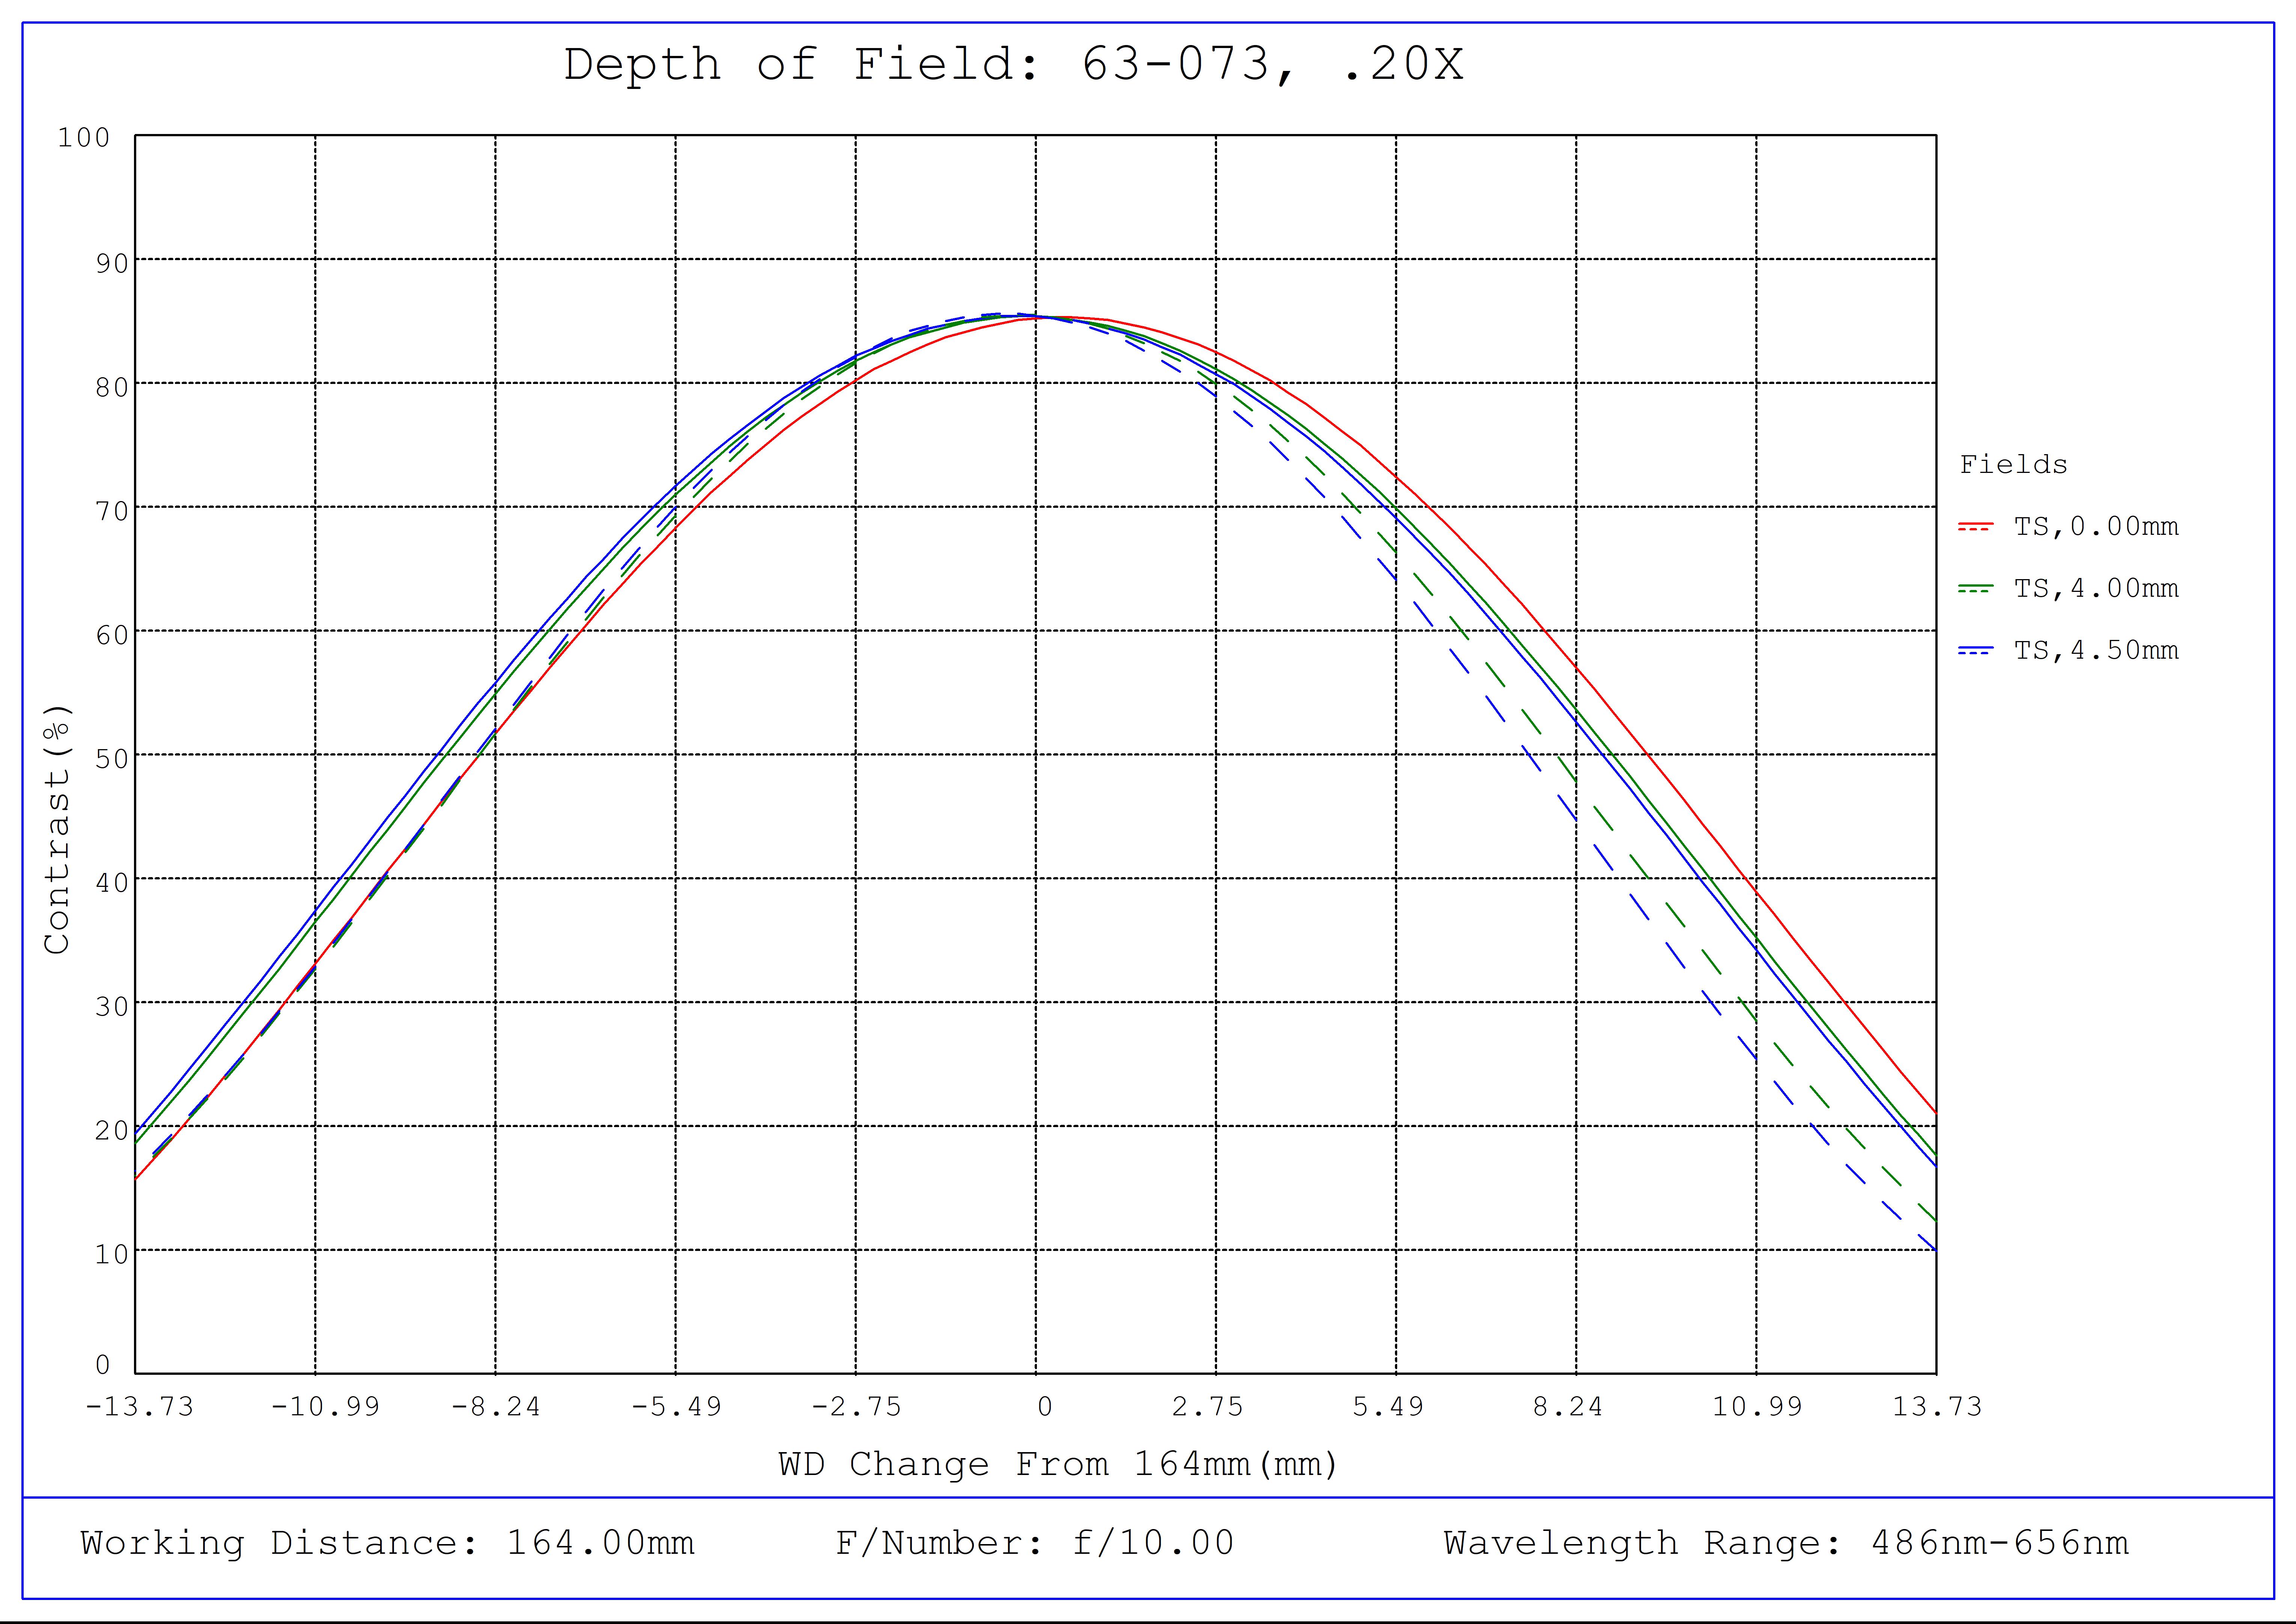 #63-073, 0.20X SilverTL™ Telecentric Lens, Depth of Field Plot, 164mm Working Distance, f10